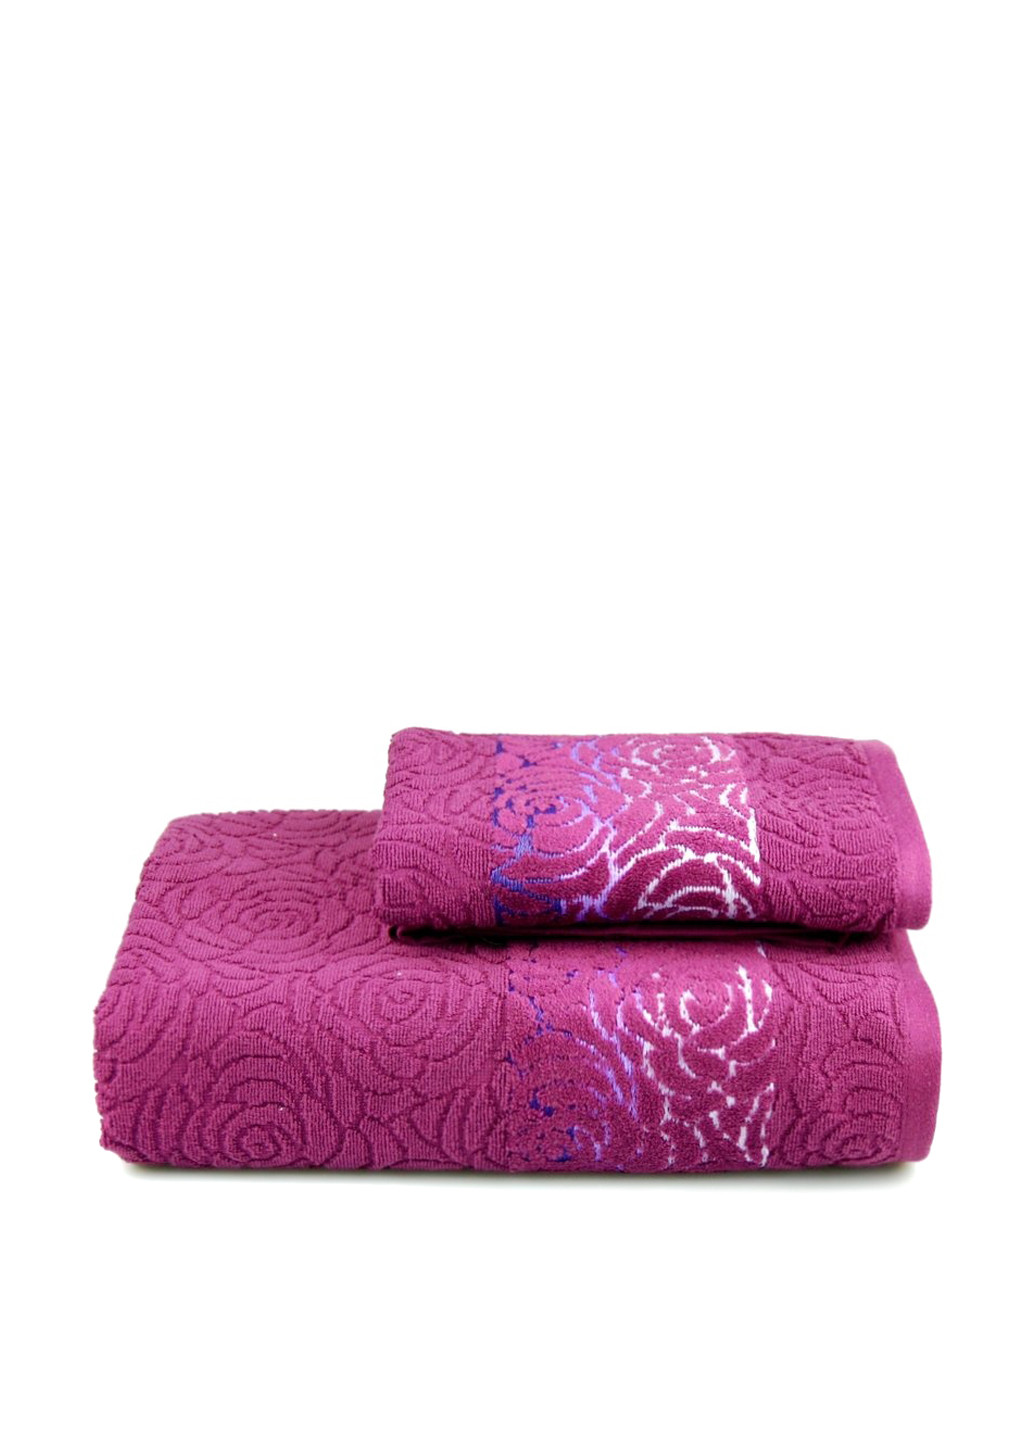 Home Line полотенце, 70х140 см рисунок фиолетовый производство - Турция